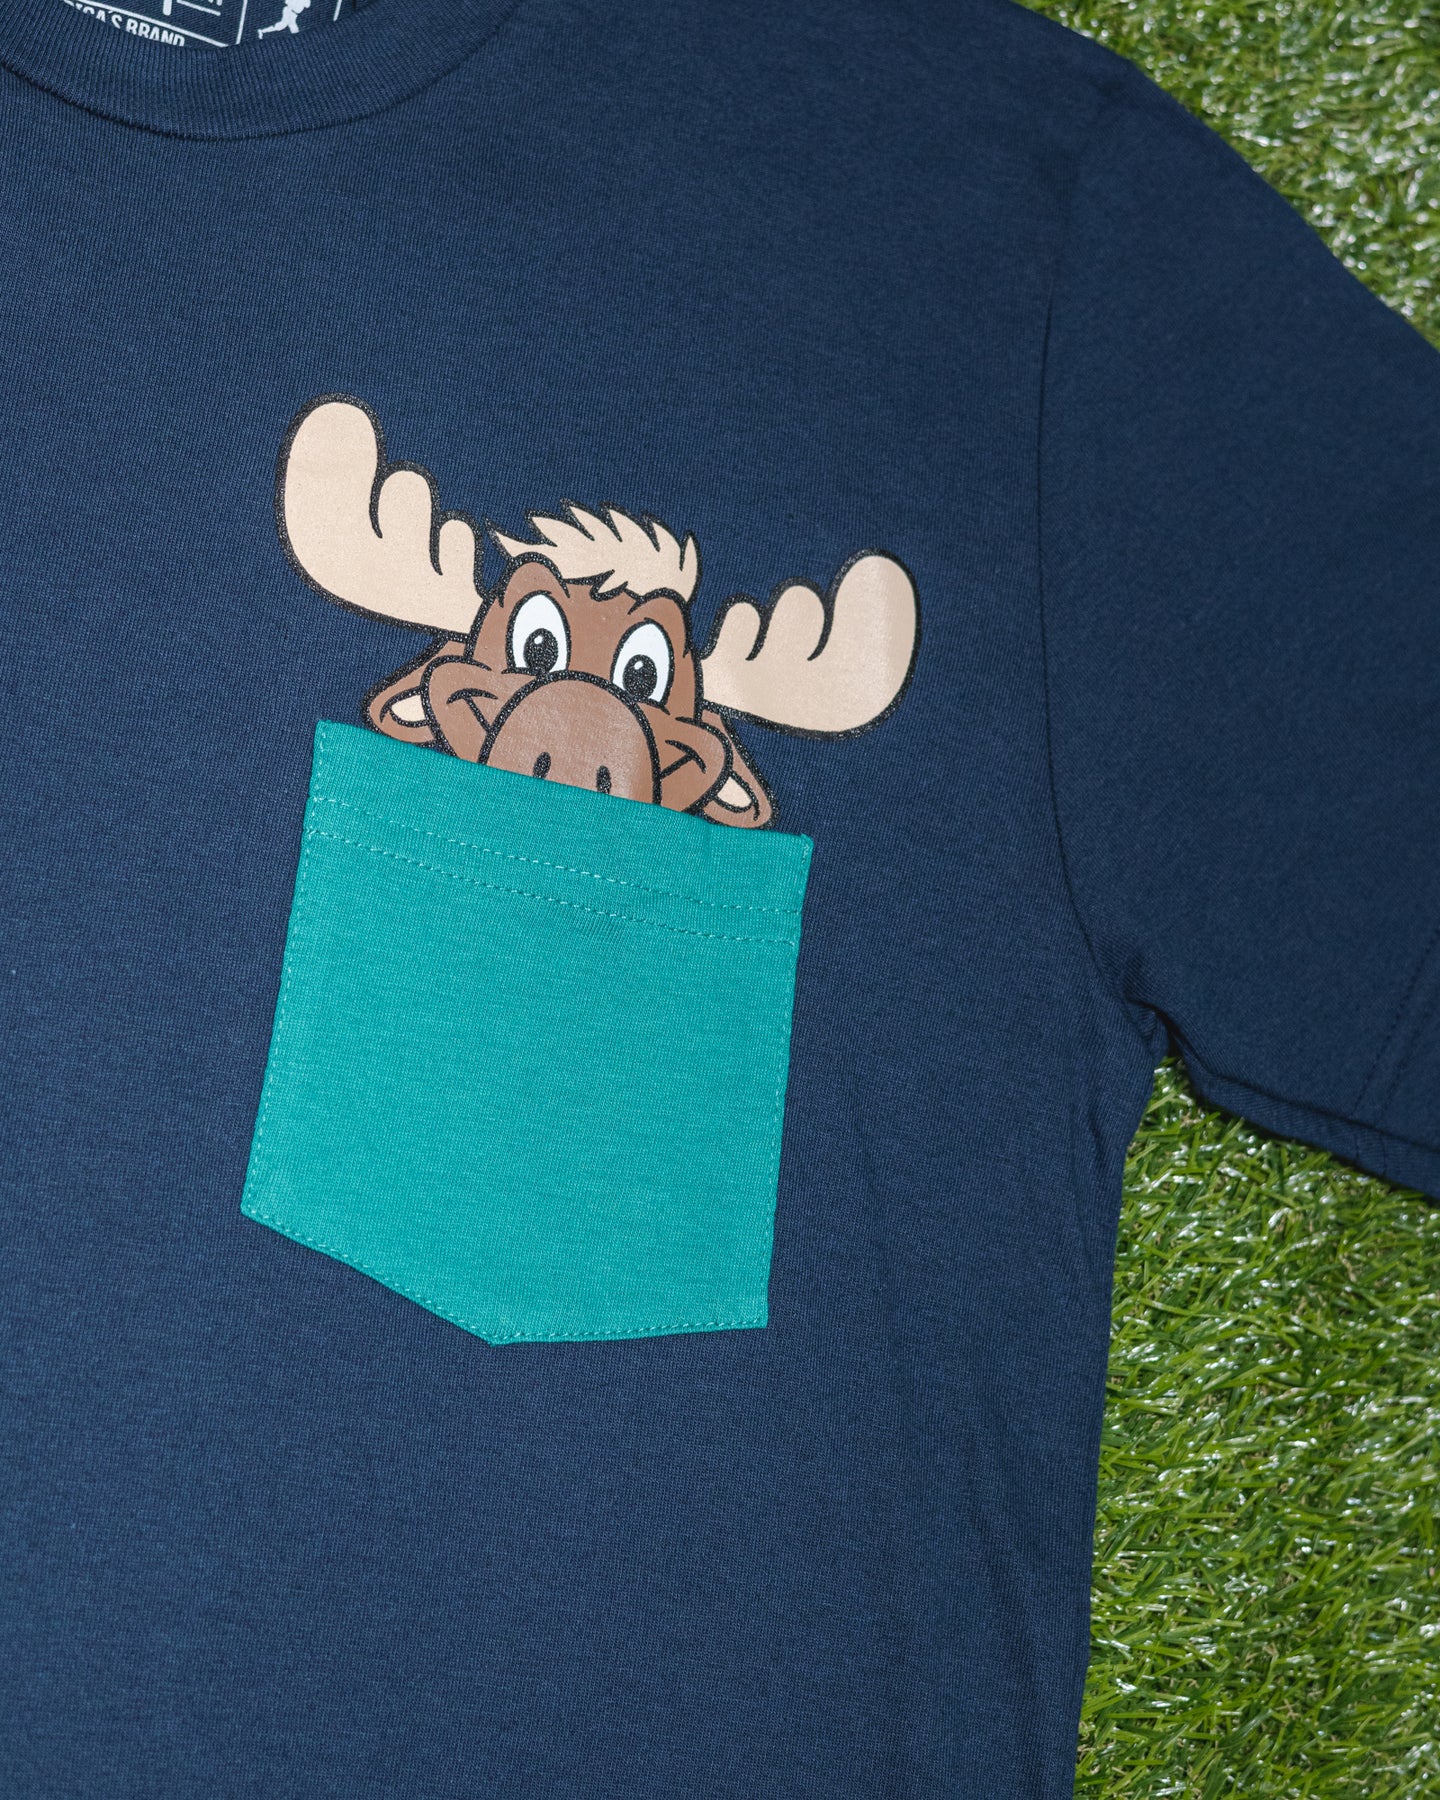 MLB Seattle Mariners Dog T-Shirt, Small